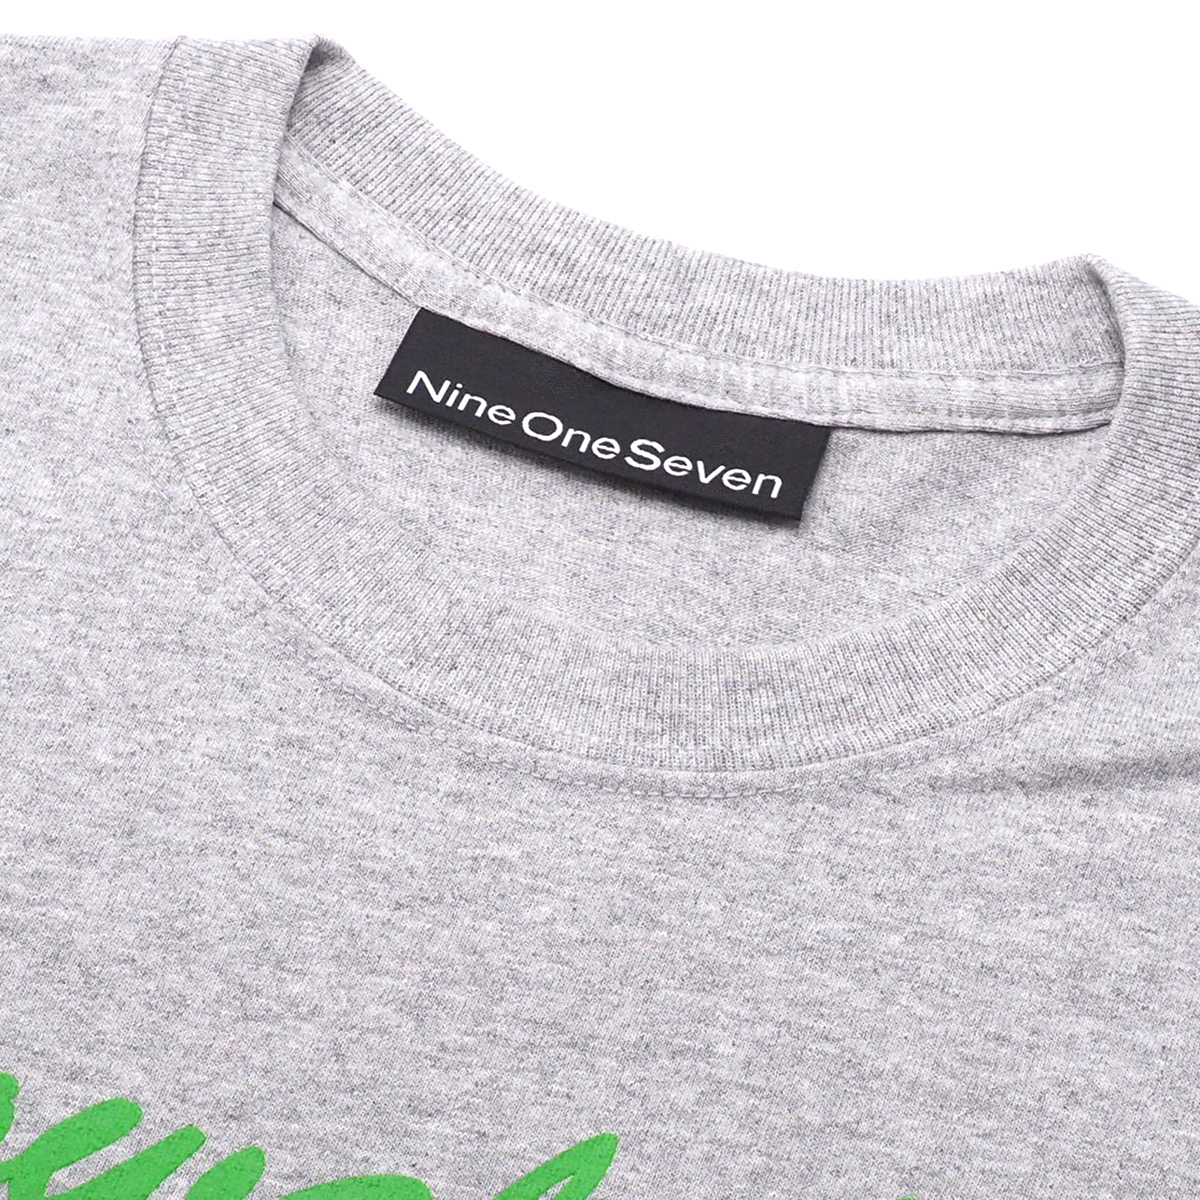 Nine One Seven - Food Delivery T-Shirt 灰M ナイン ワン セブン - フード デリバリー ティーシャツ 2018SSの画像3